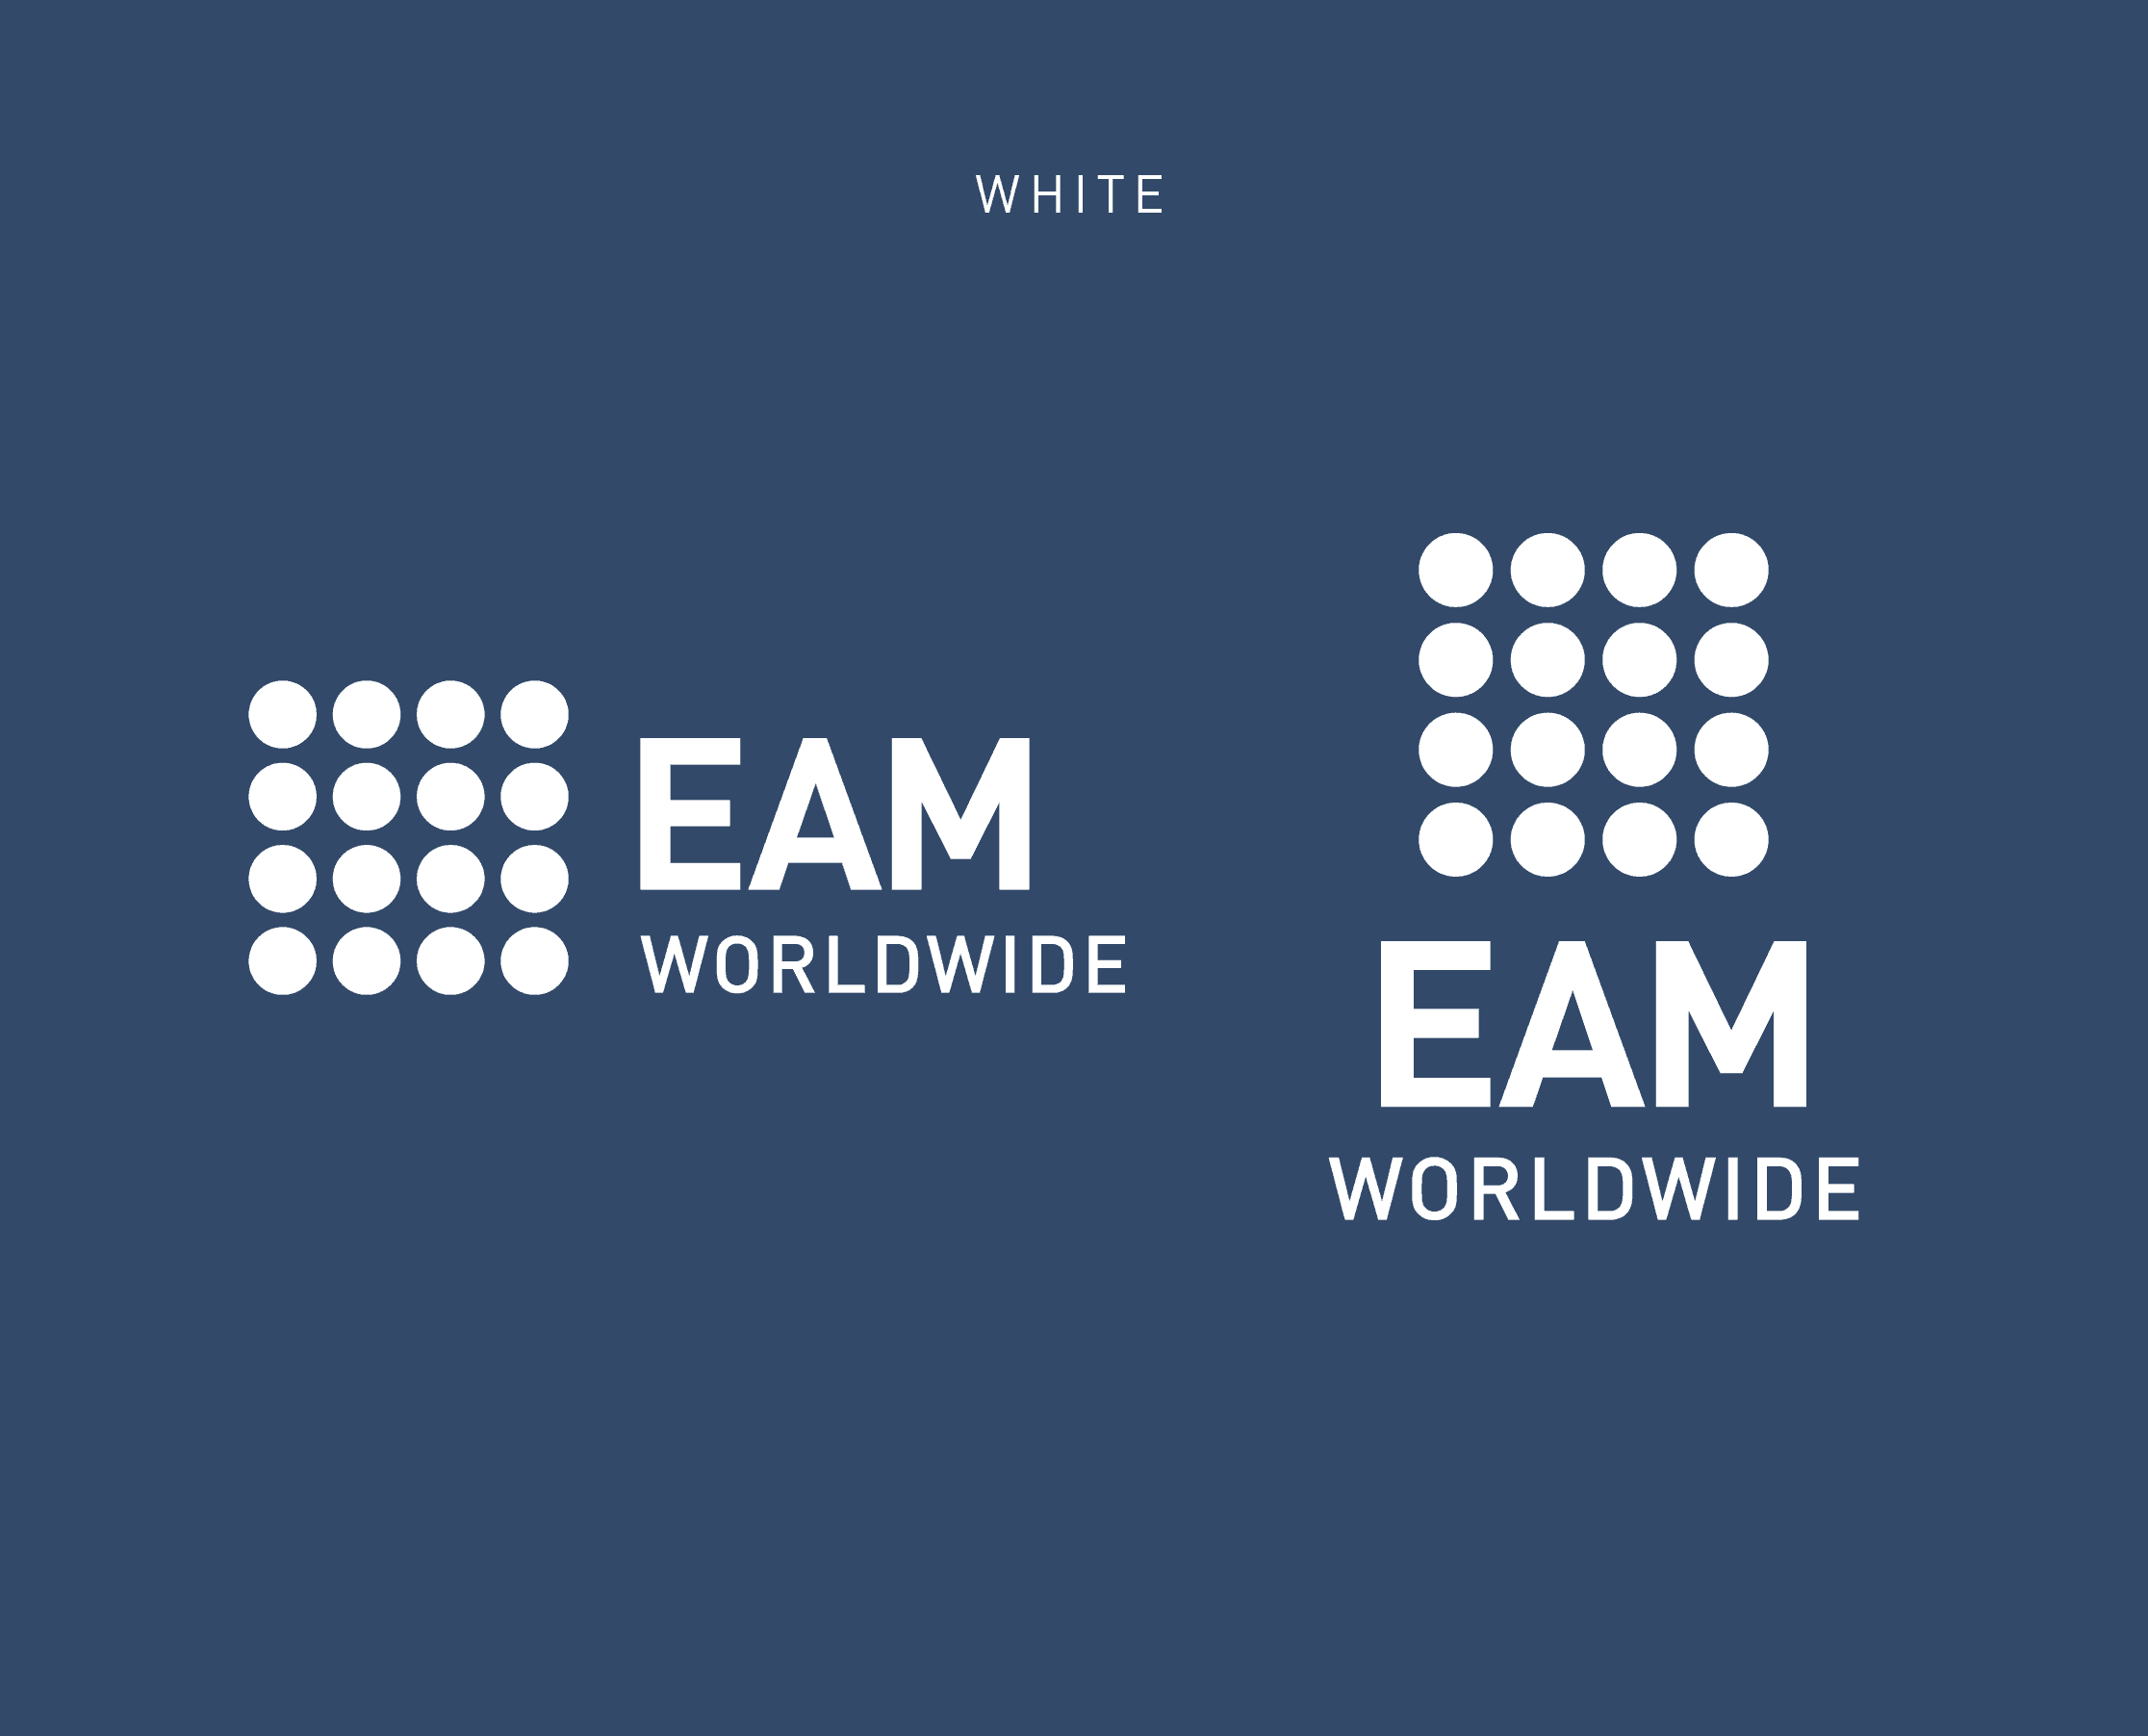 EAM Worldwide all white logo usage on blue background